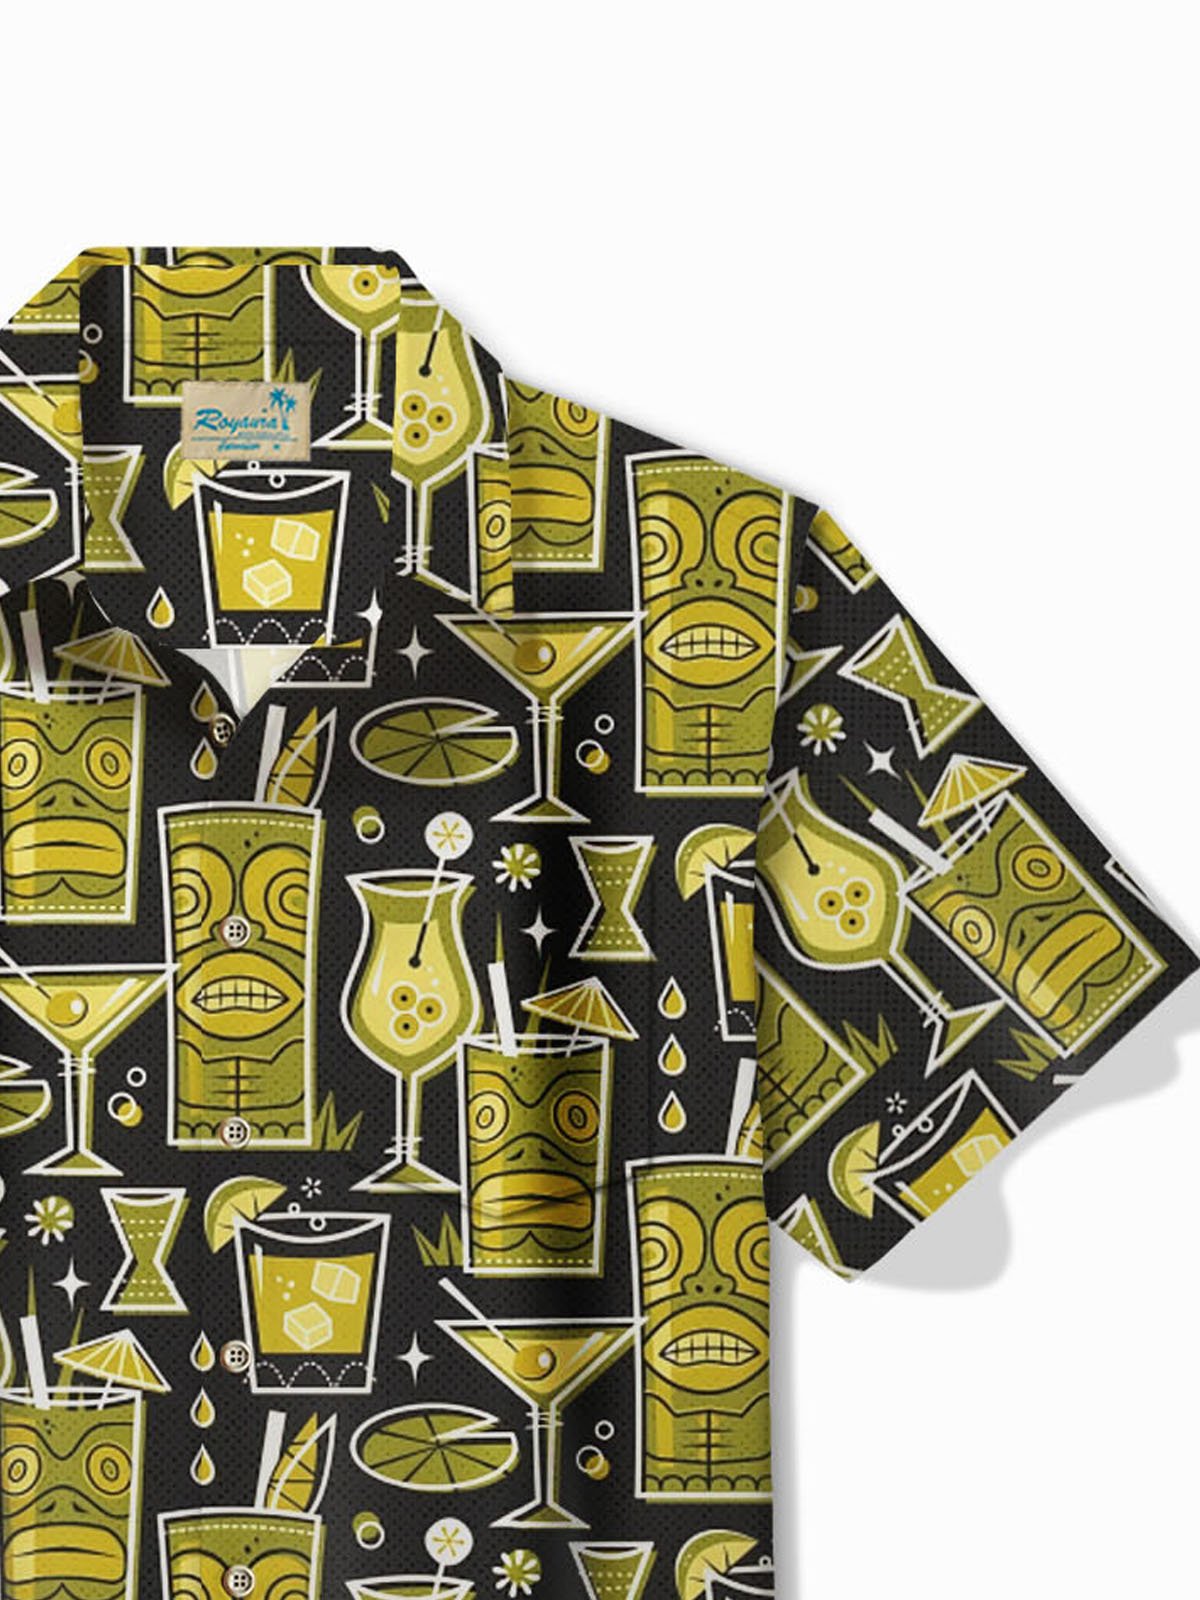 Royaura®Hawaiian Tiki Tequila Print Men's Button Pocket Short Sleeve Shirt